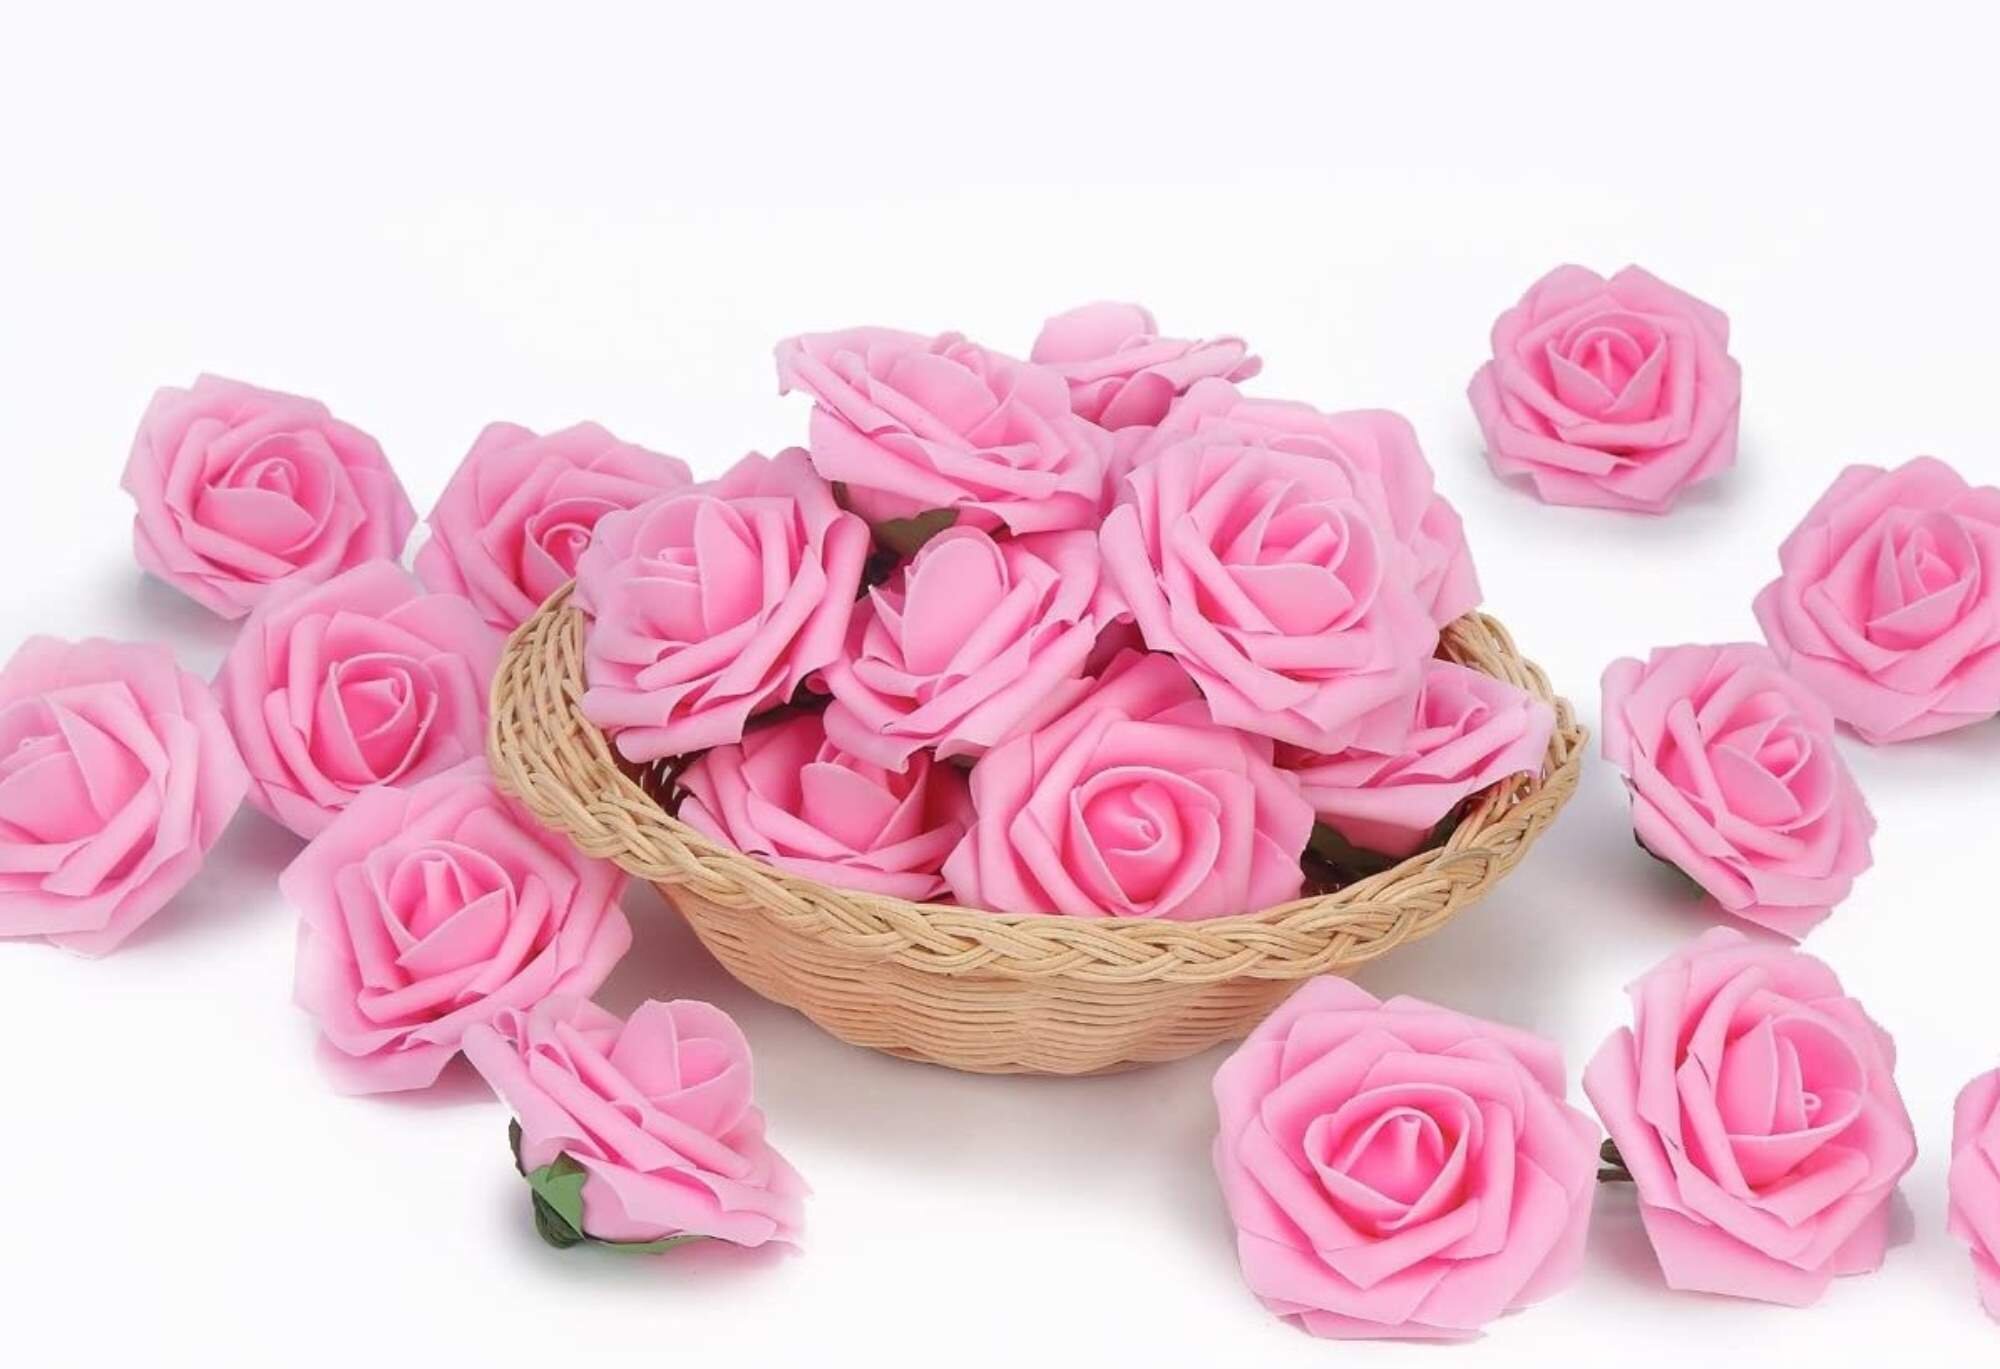 Artificial Flowers Home Bouquet Silk Rose 12 Heads Wedding Buch Party Decor Fake 